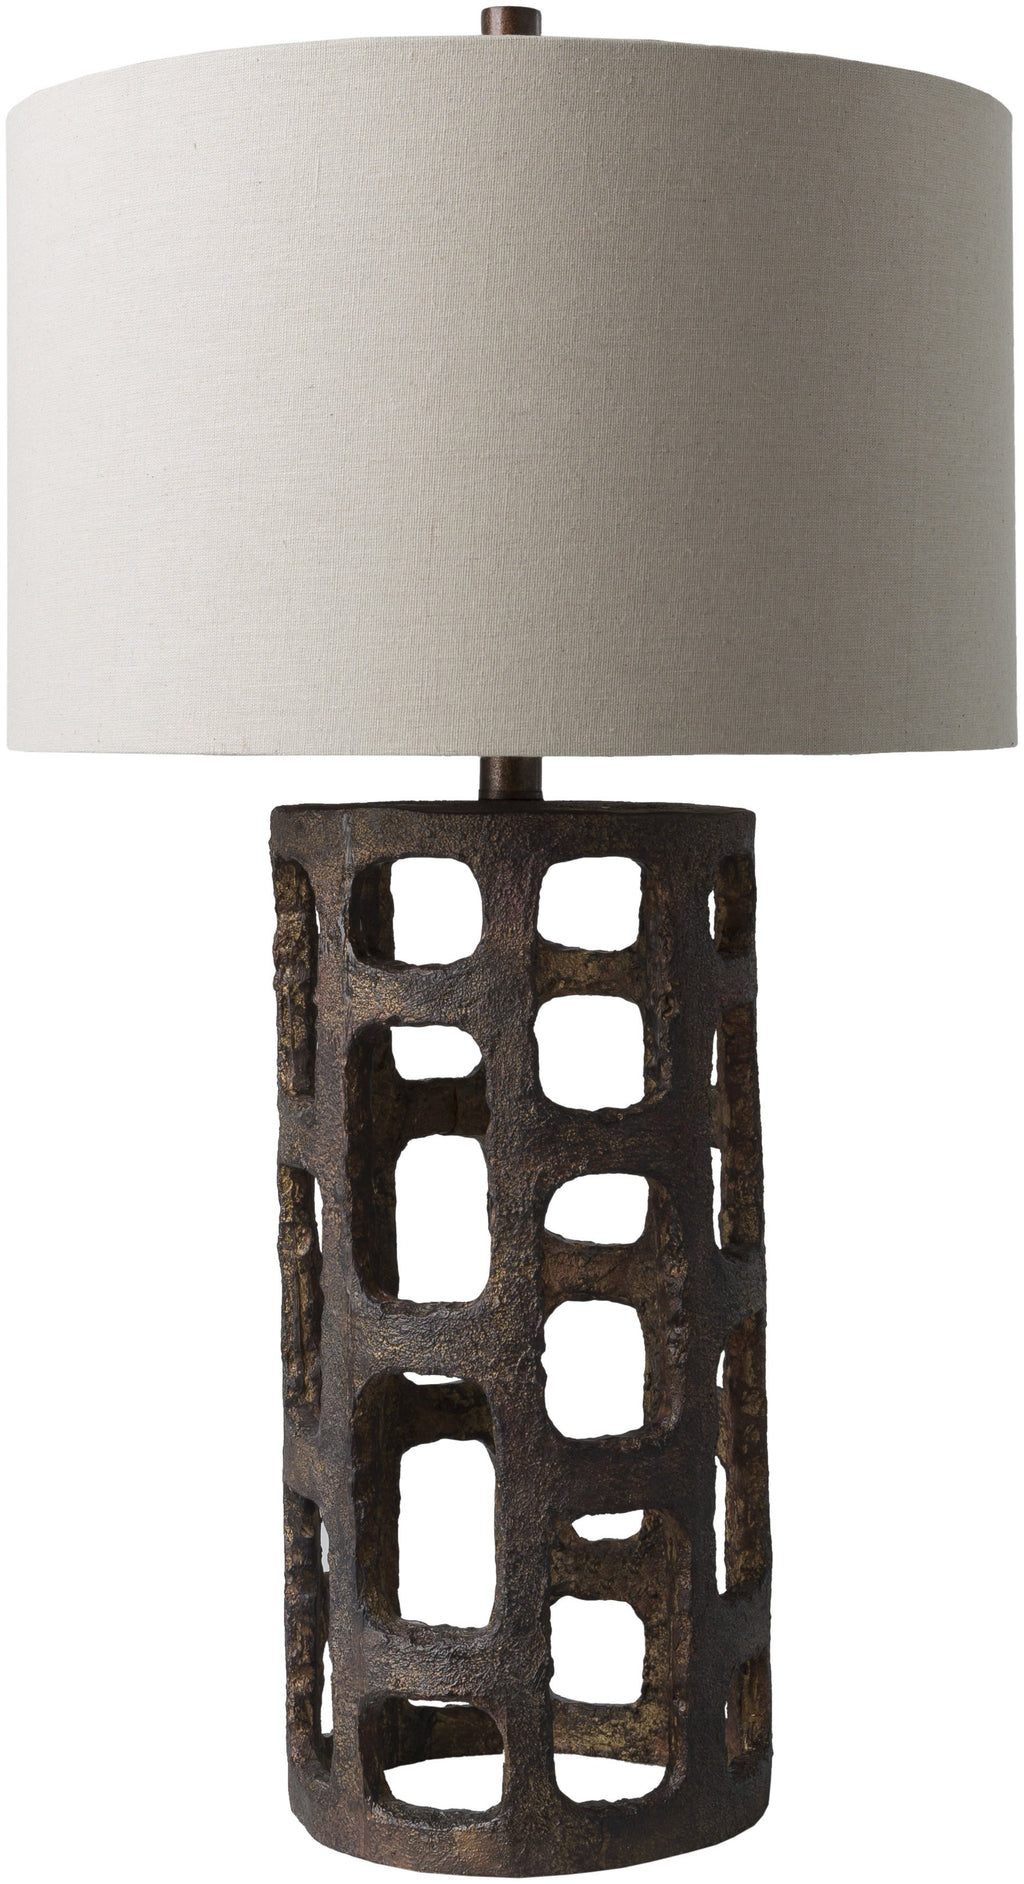 Egerton Table Lamp